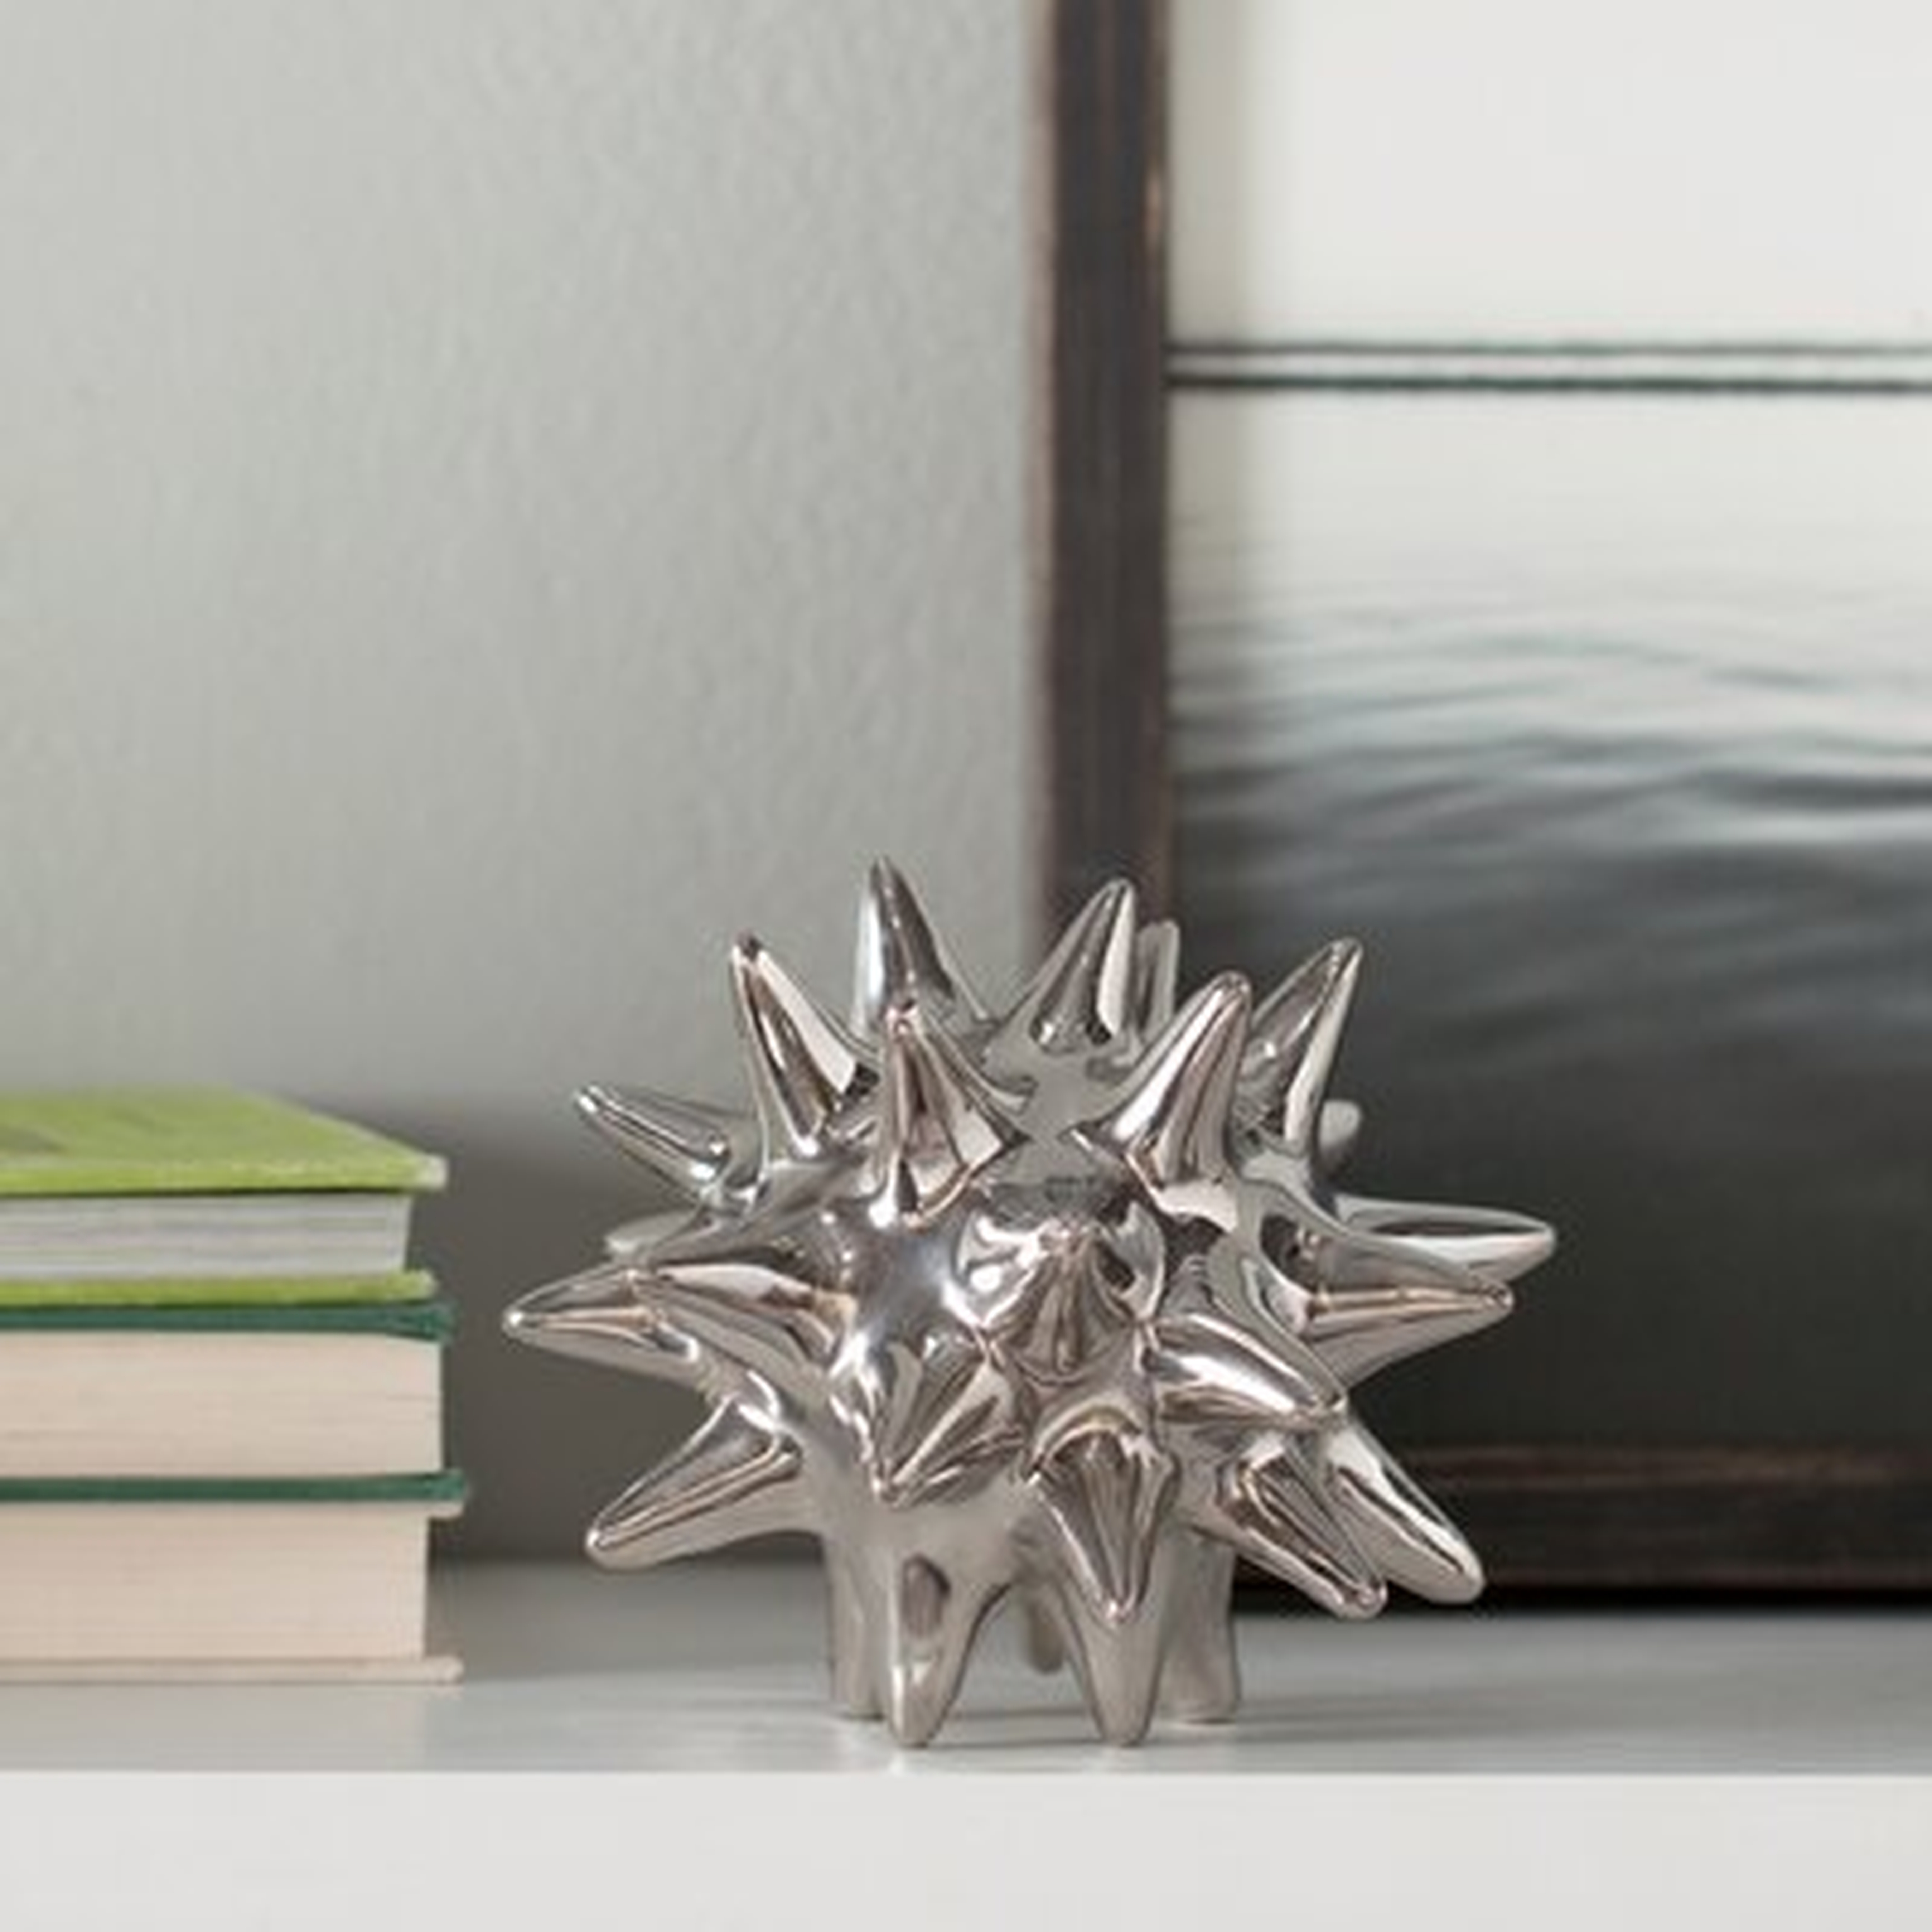 Hamblen Urchin Shiny Silver Object, 7" H x 7" W x 7" D - Wayfair